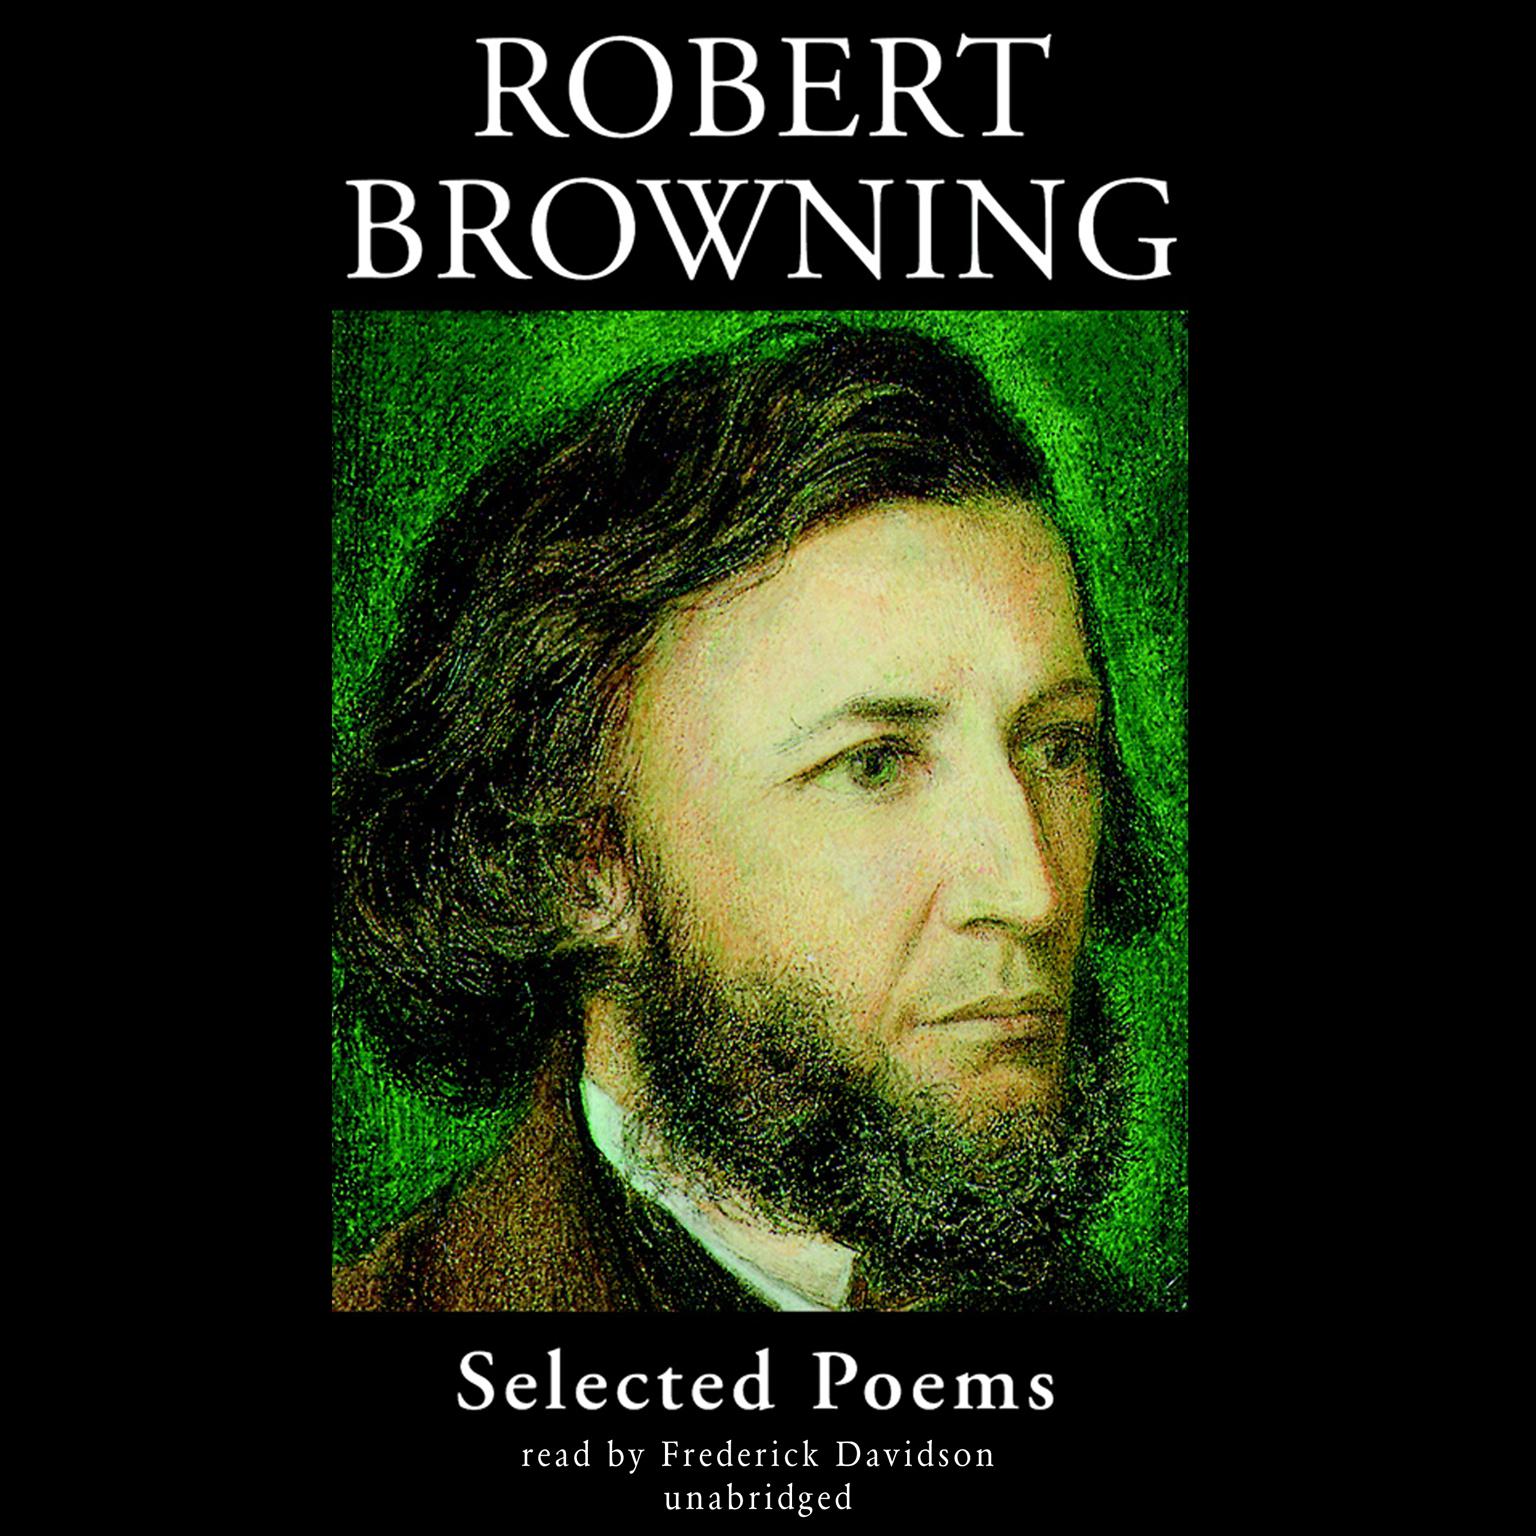 Robert Browning: Selected Poems Audiobook, by Robert Browning